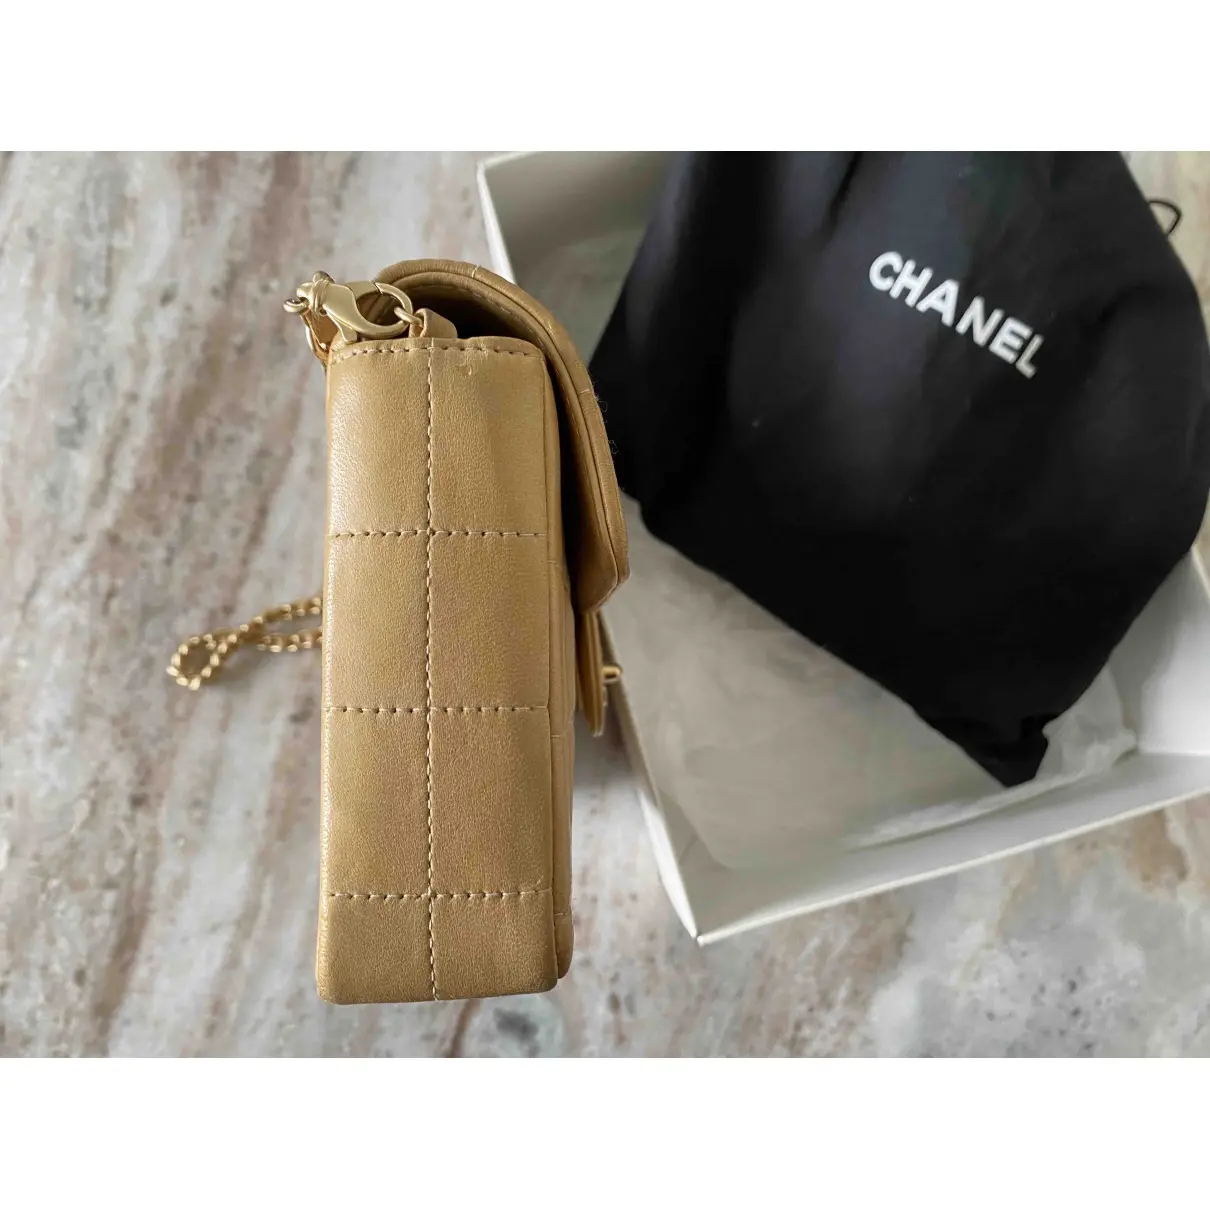 East West Chocolate Bar leather handbag Chanel